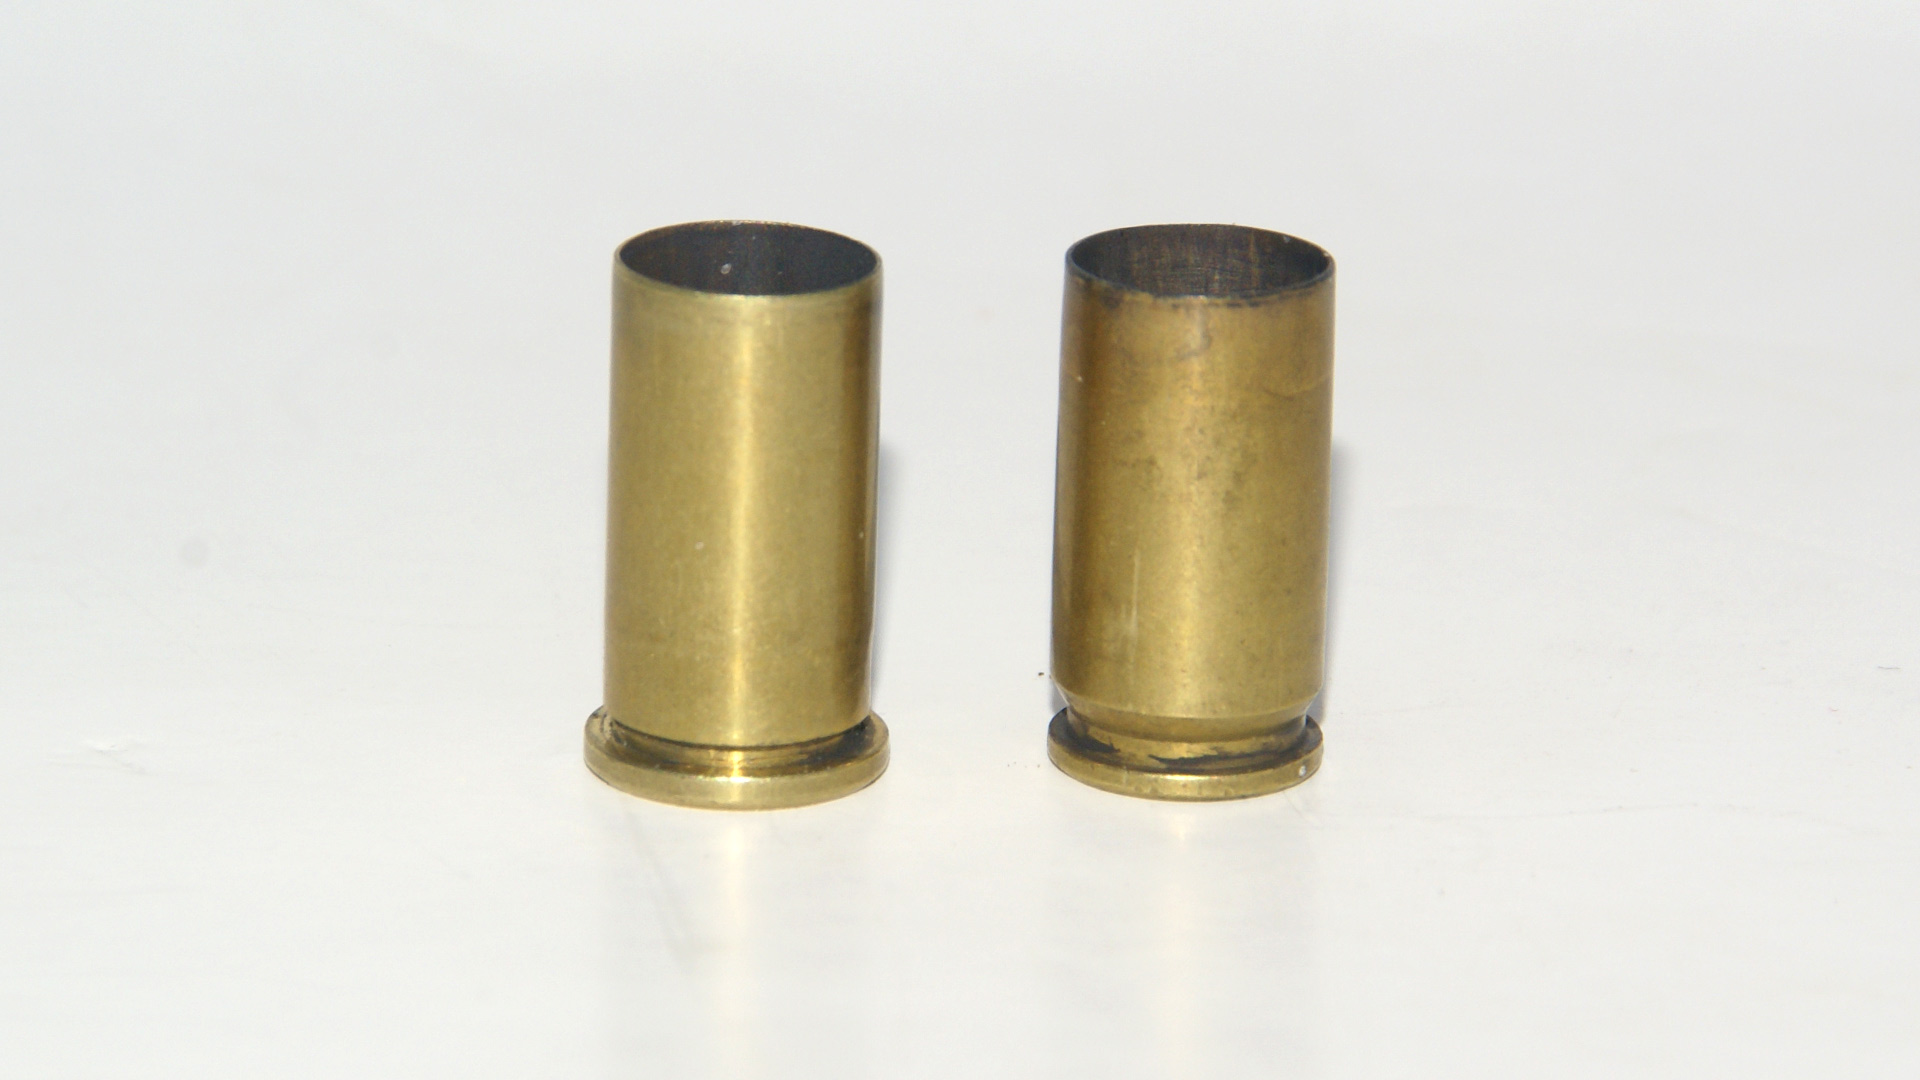 .38 Short Colt and 9mm Luger cases, side-by-side